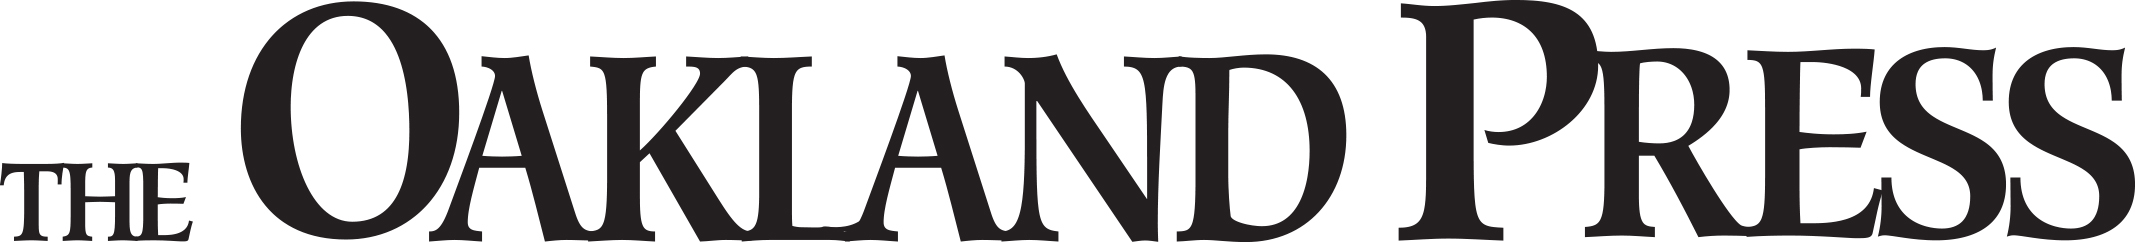 The Oakland Press Logo.jpg